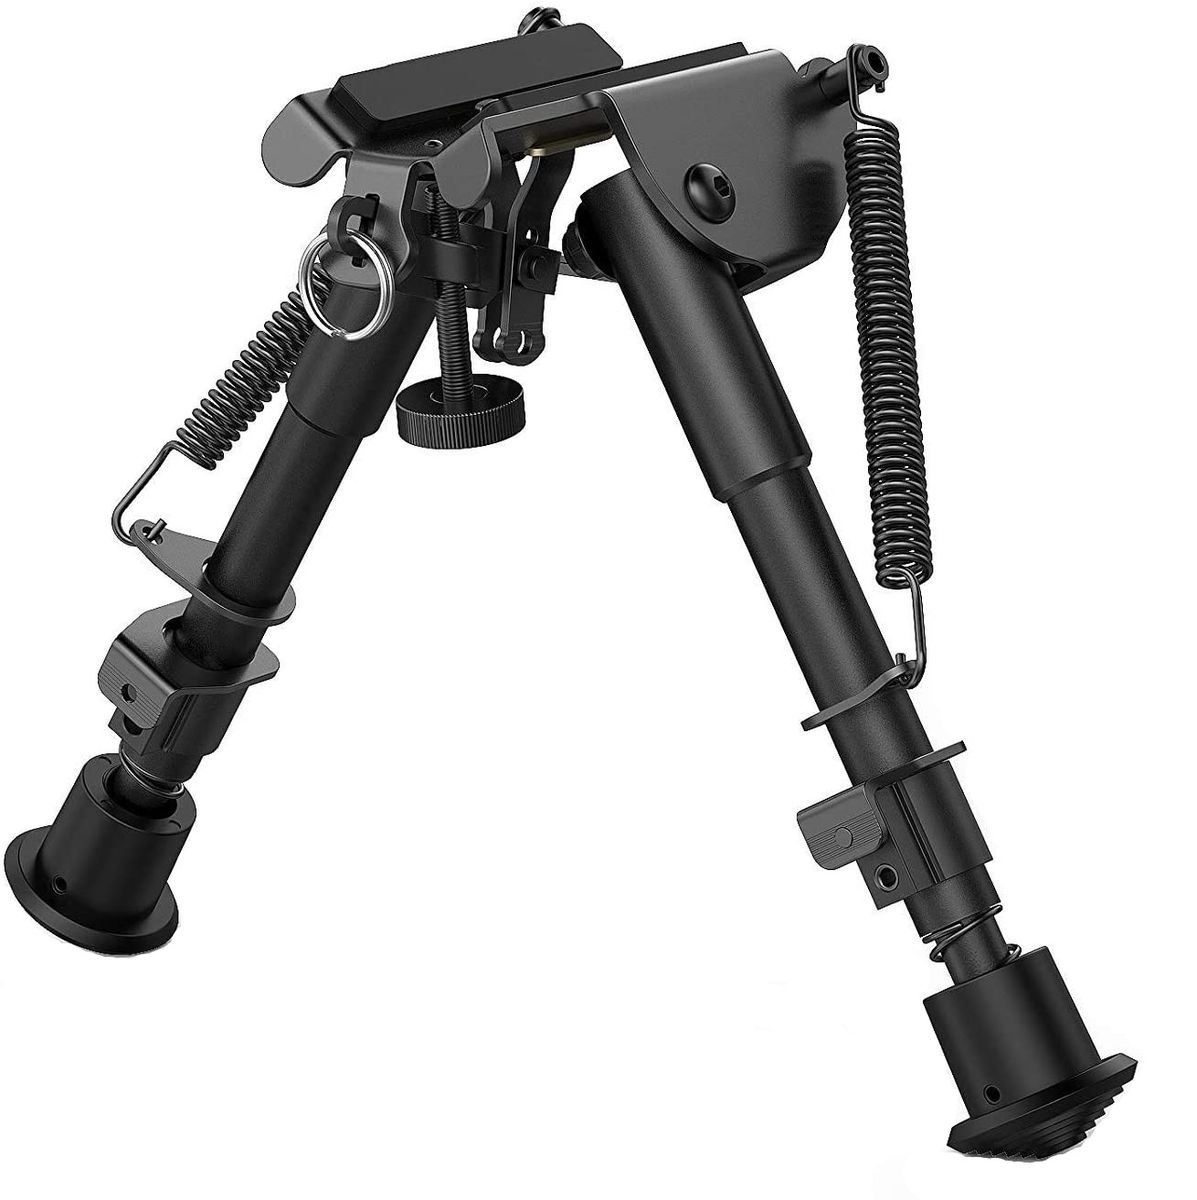 rifle-bipod-jd-47-butterfly-rifle-stand-adjustable-leg-length-6-9